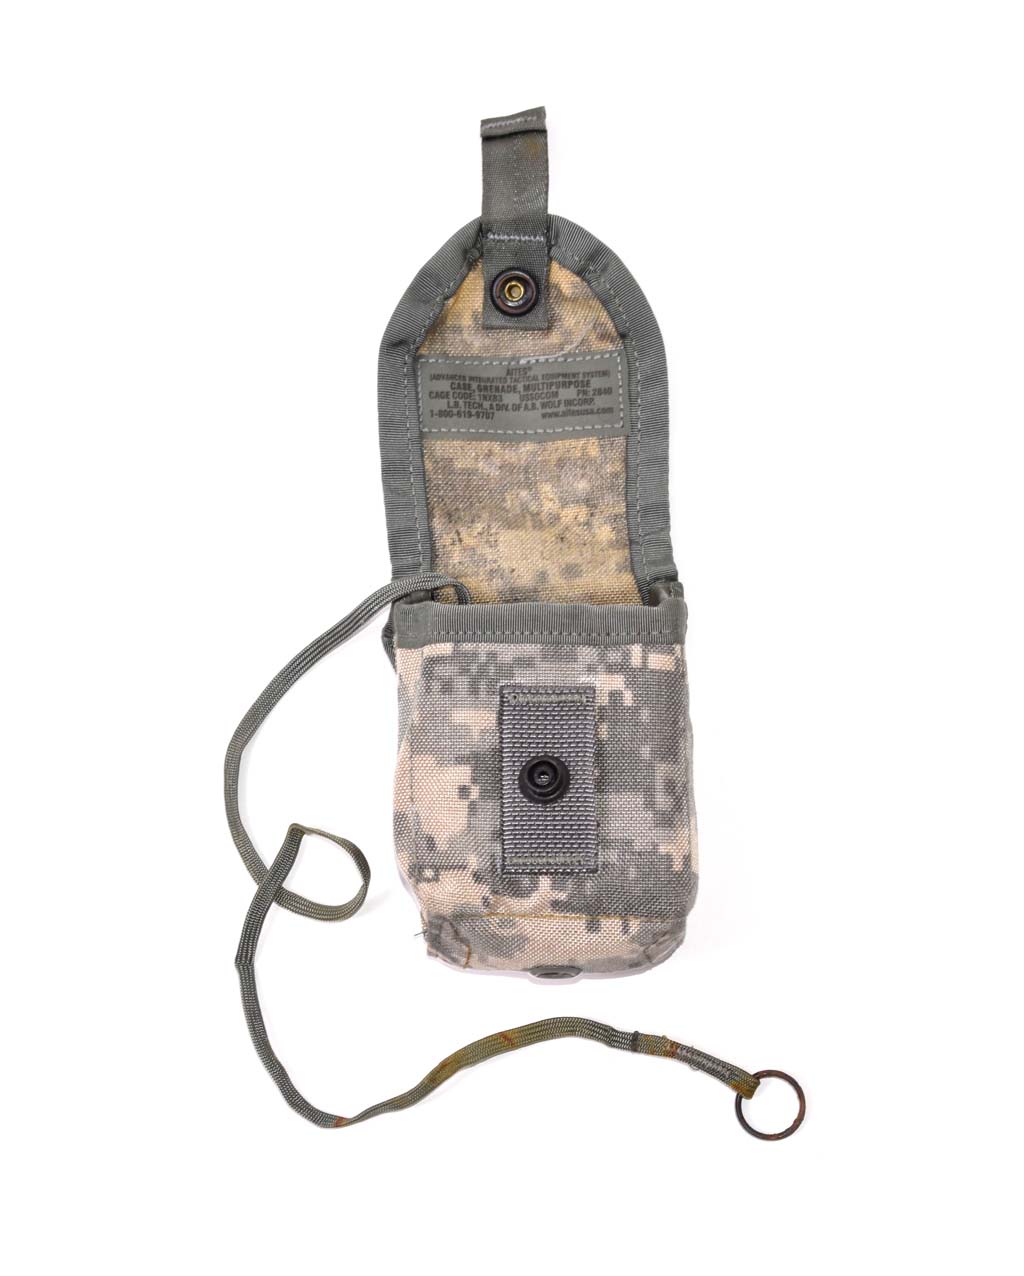 Подсумок гранатный Grenade Multipurpose MOLLE acu США